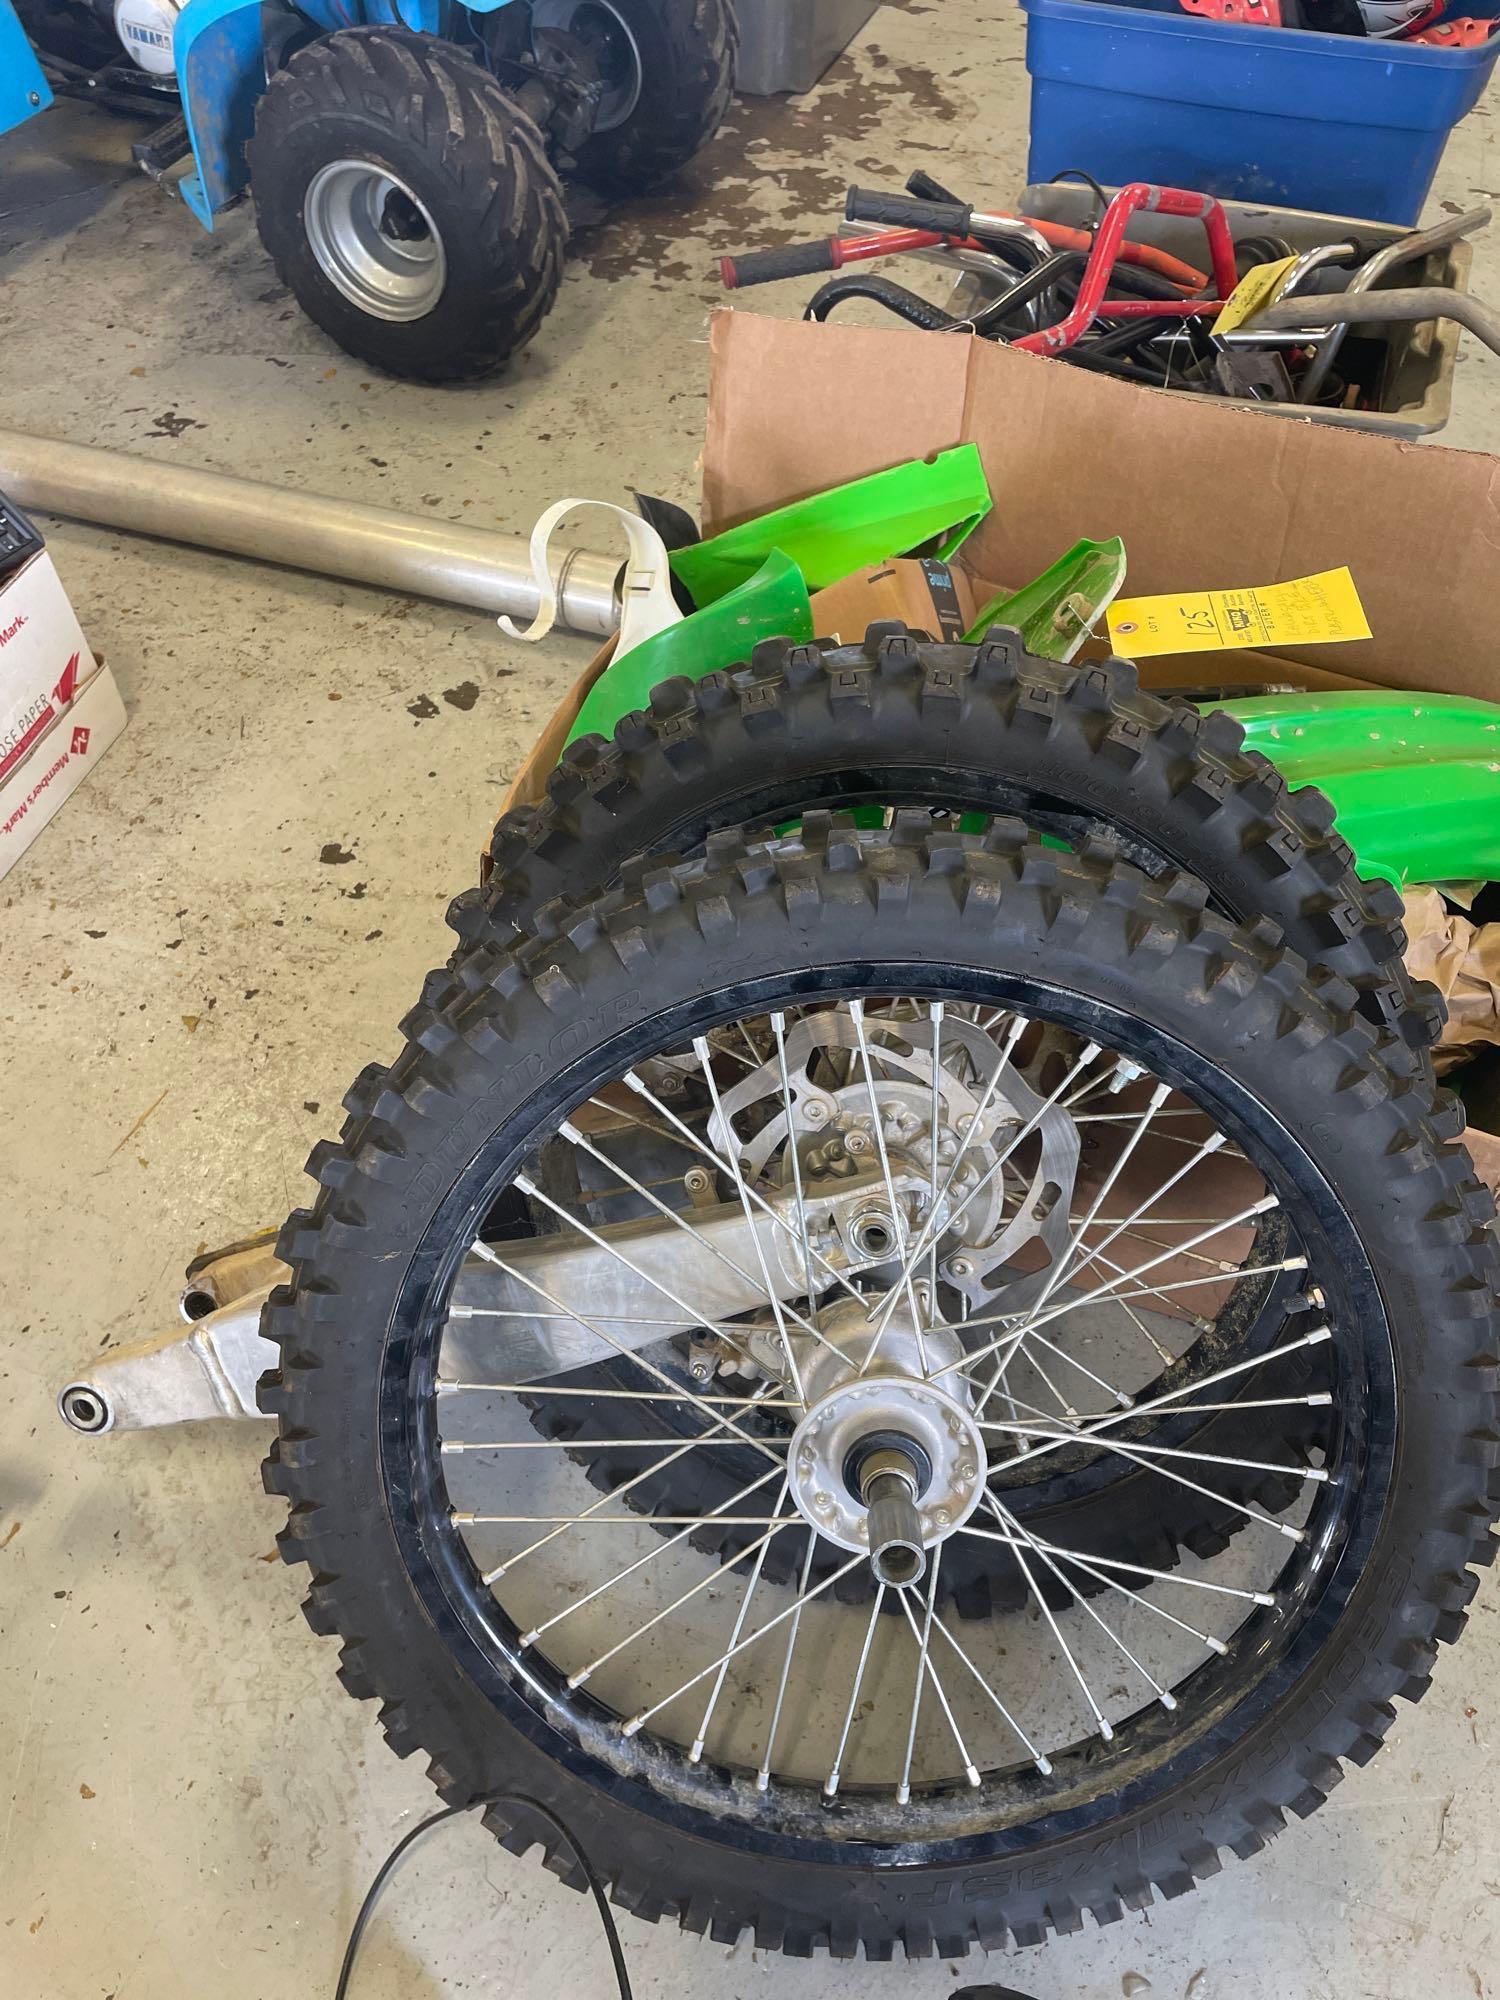 Kawasaki Dirt Bike Plastic and Wheels